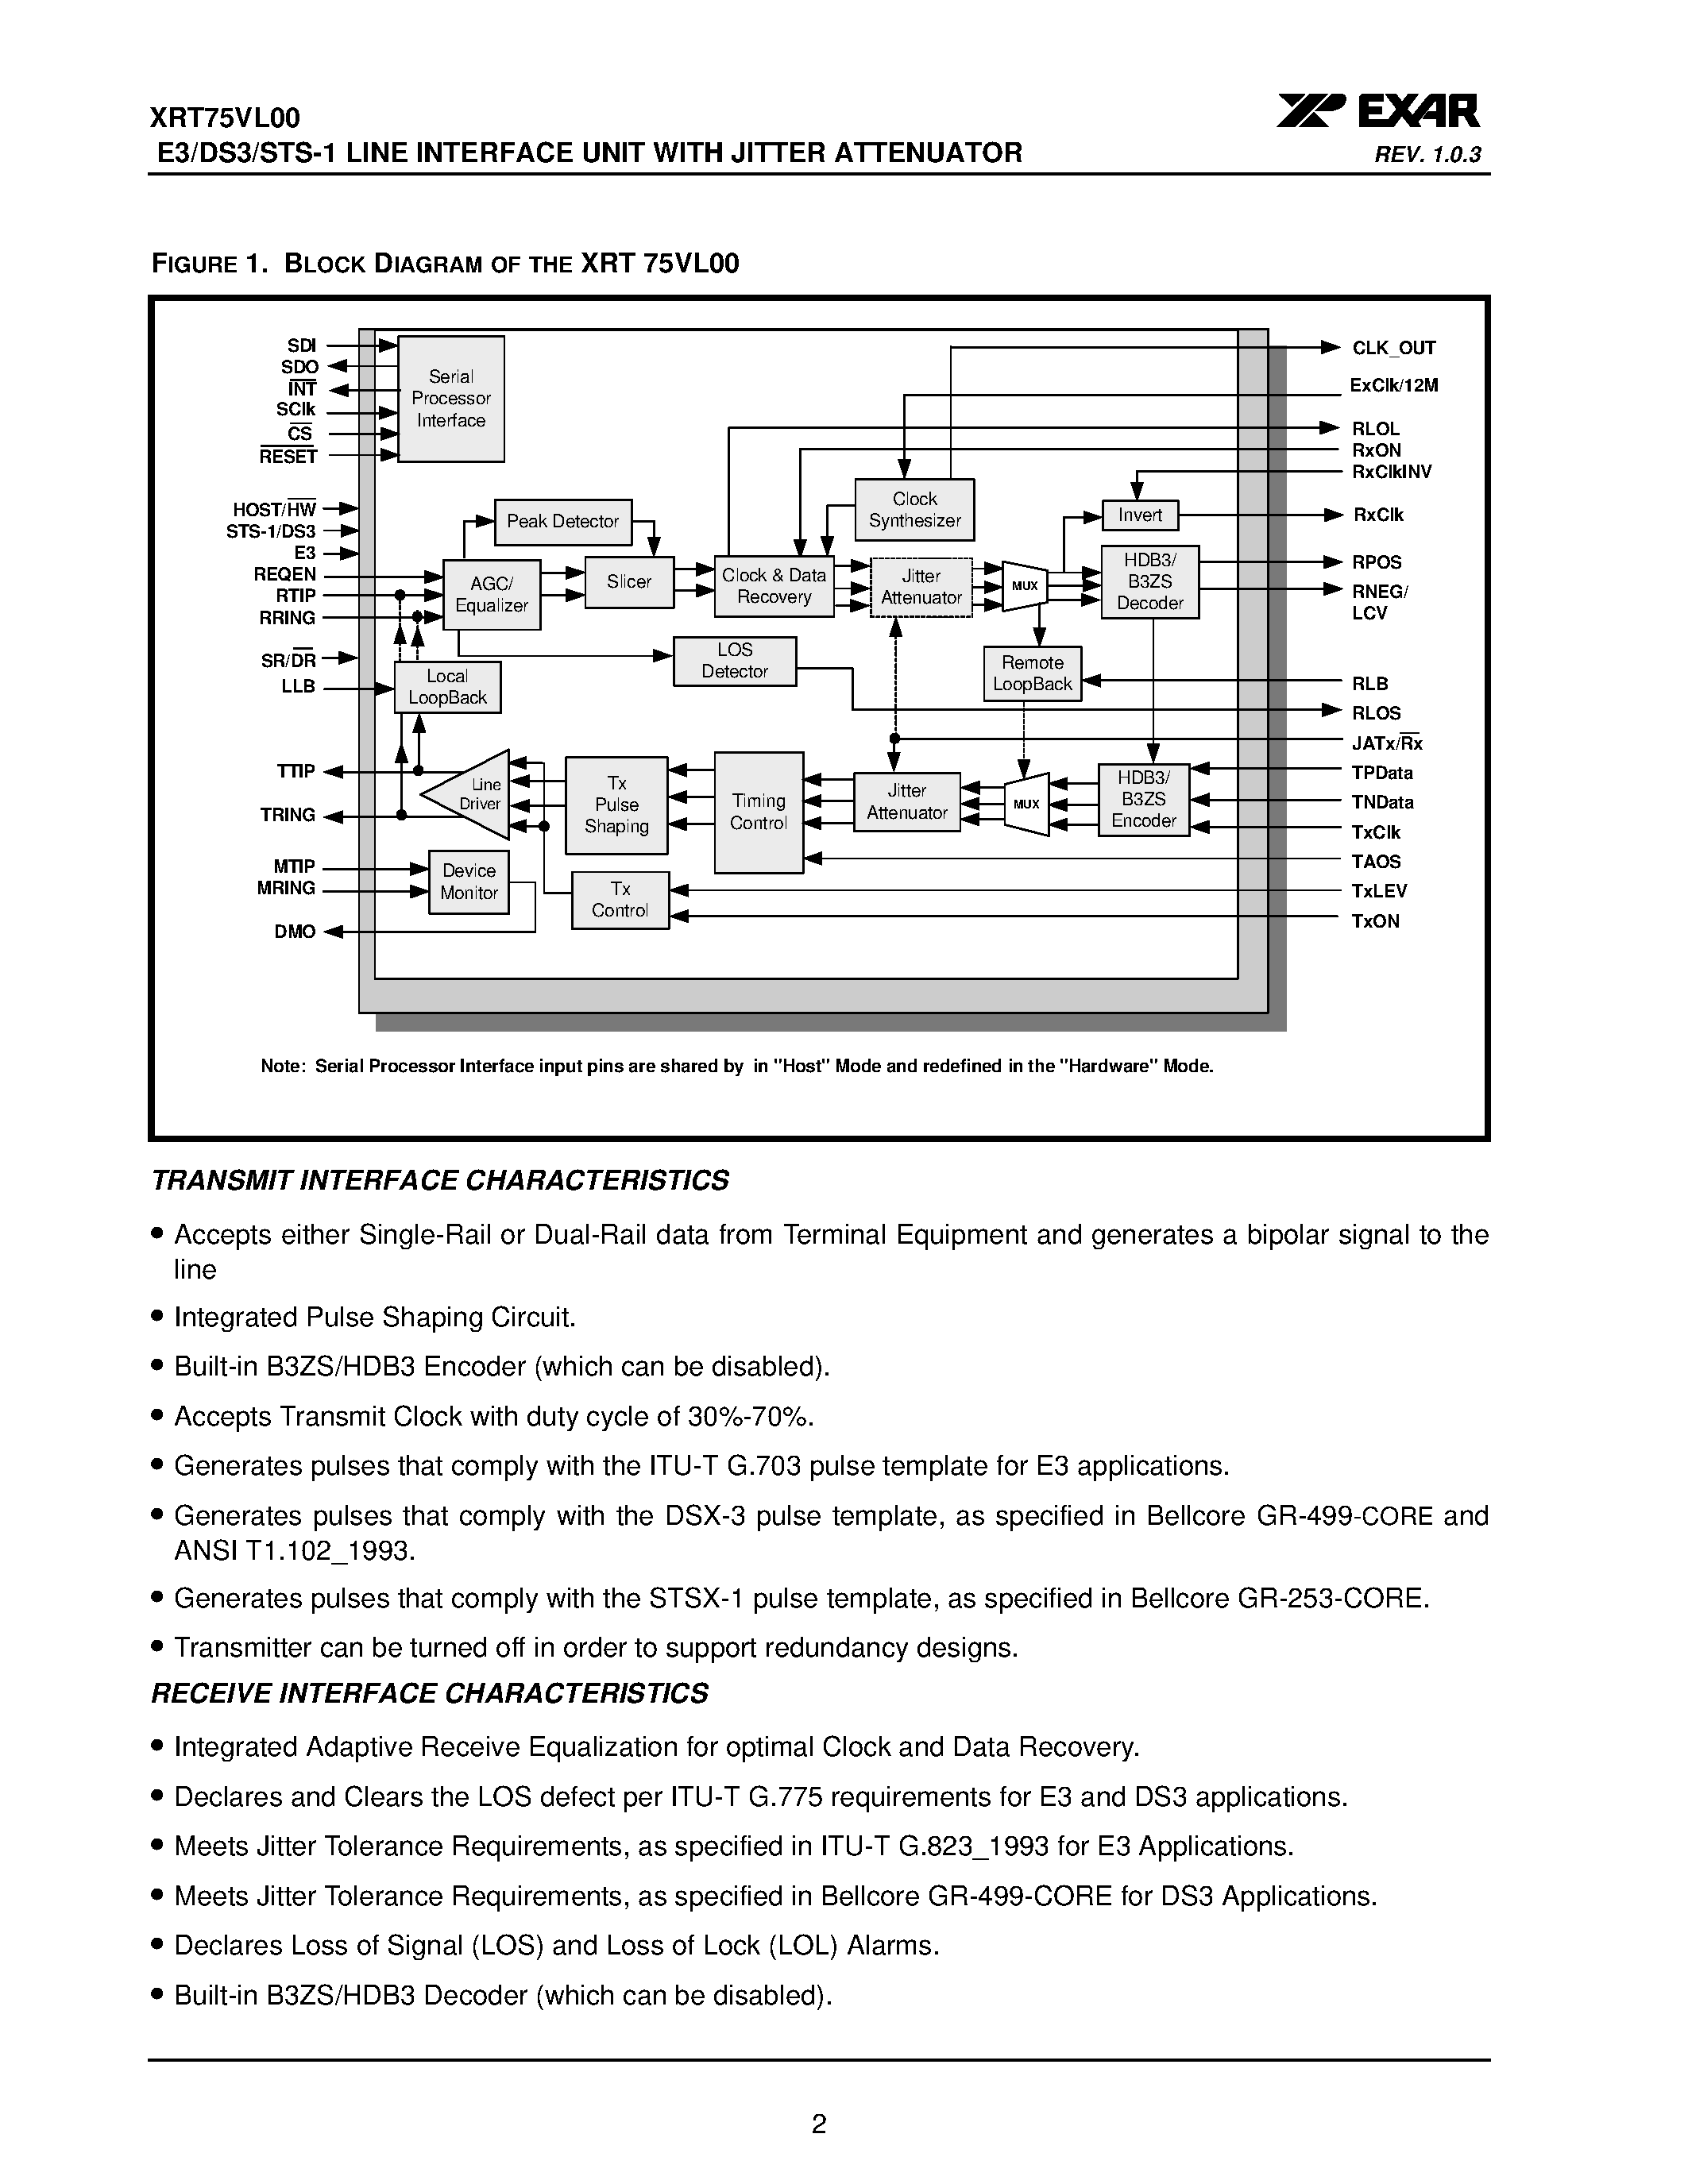 Datasheet XRT75VL00 - E3/DS3/STS-1 LINE INTERFACE UNIT page 2